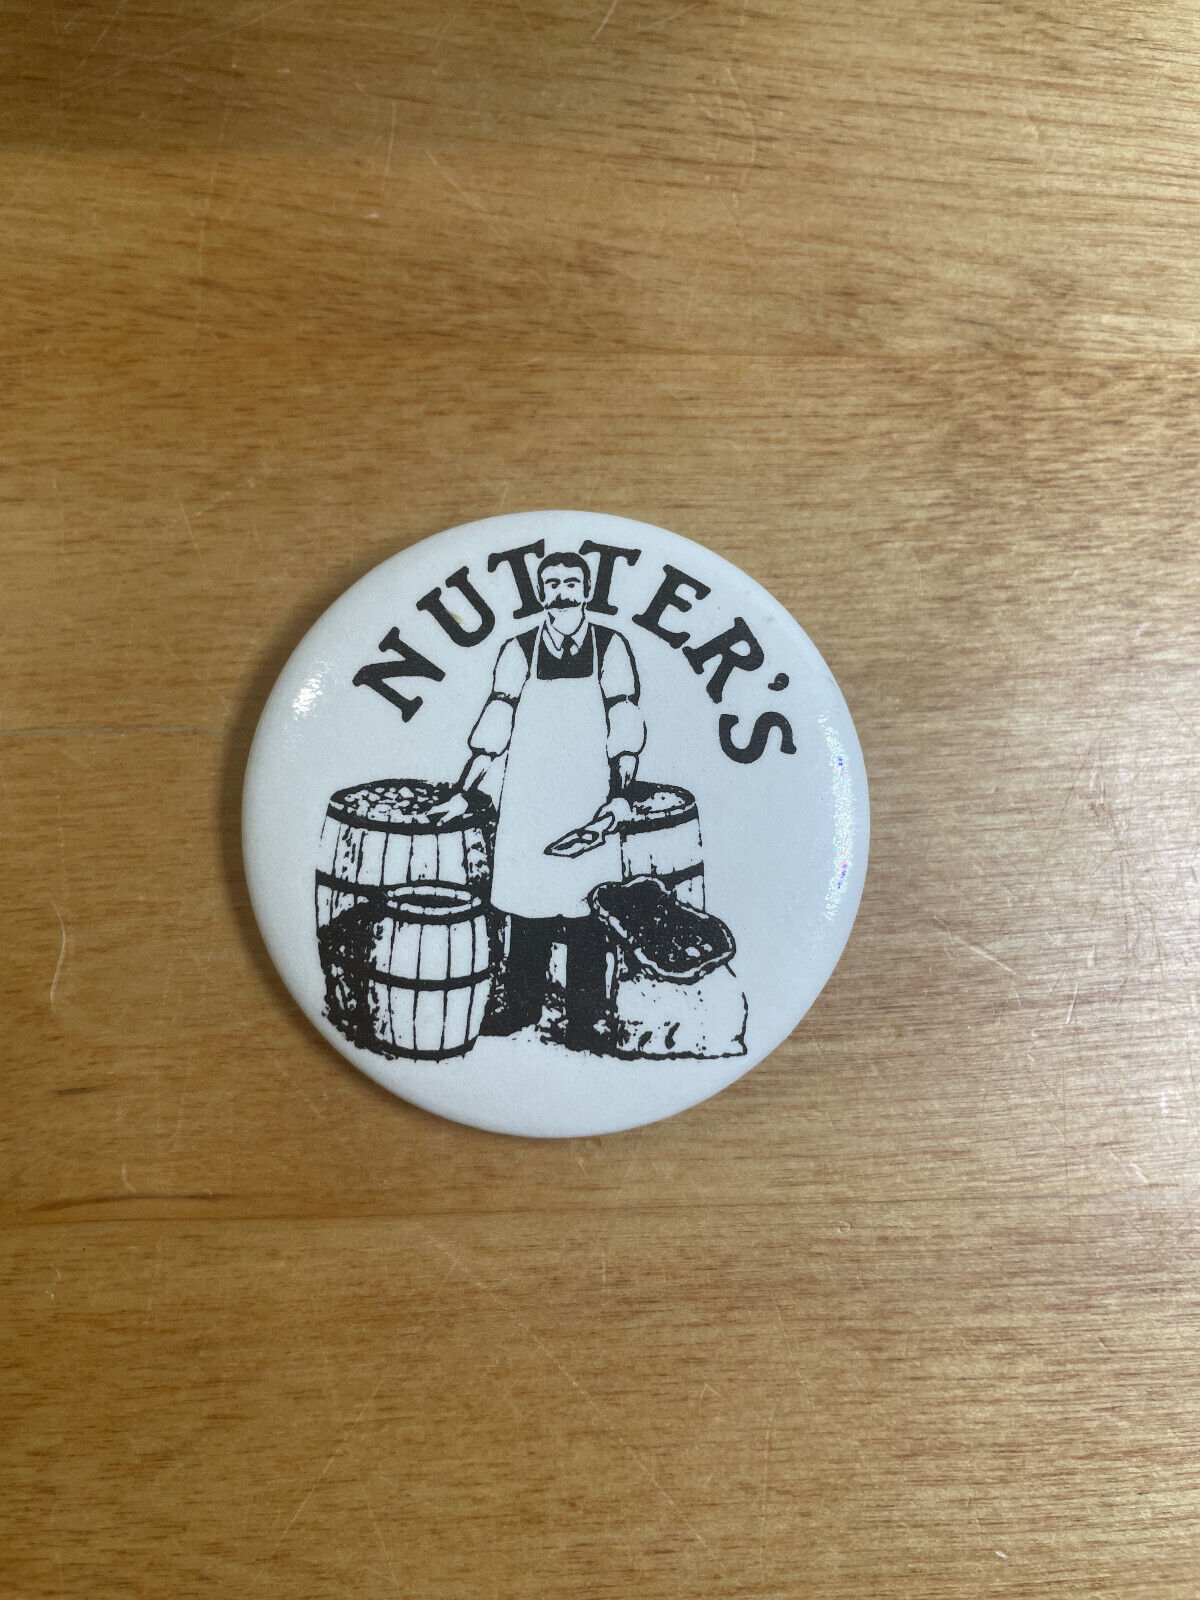 Nutter\'s Peanuts Advertisement Marketing Vintage Metal Pinback Pin Button